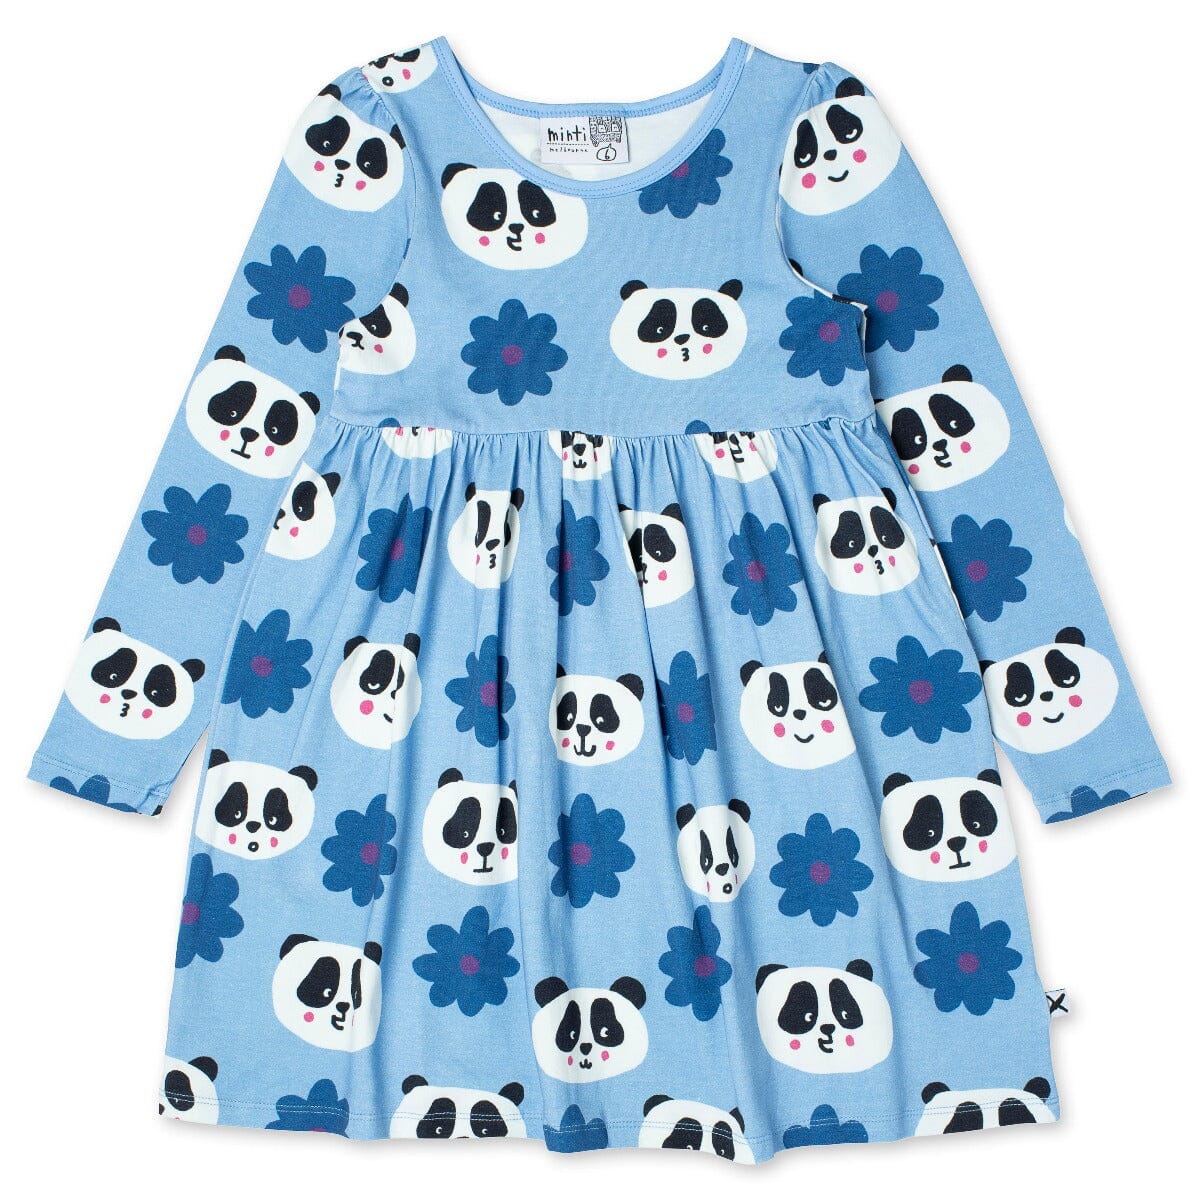 Flowers And Pandas Dress